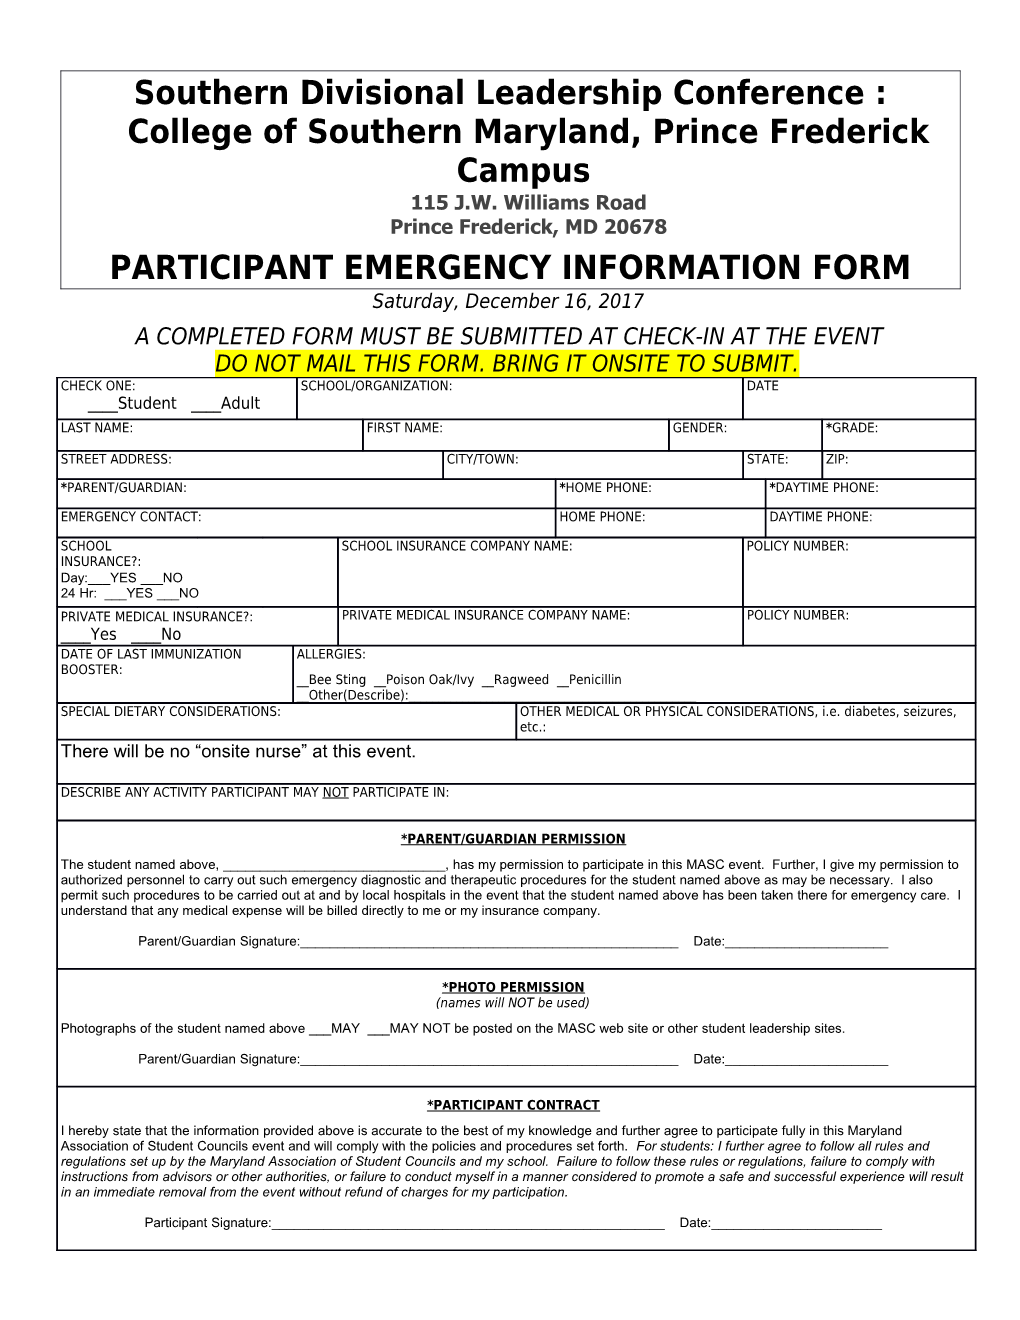 Participant Emergency Information Form